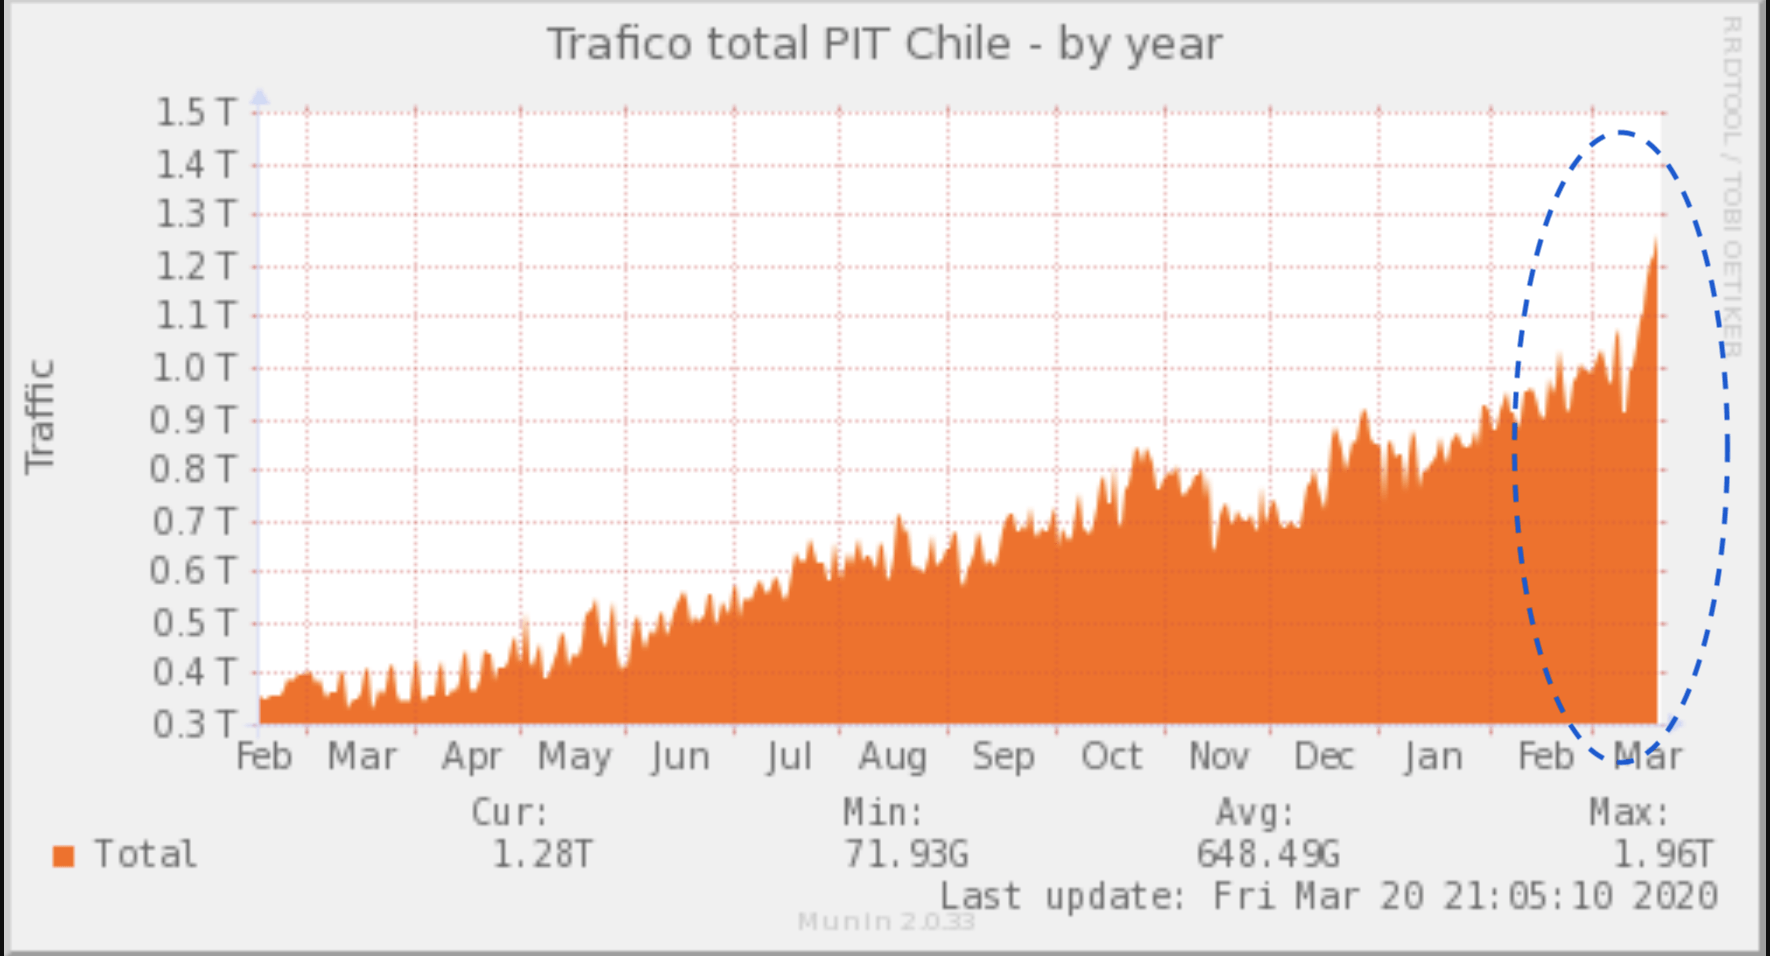 Tráfico Anual medido en PIT Chile